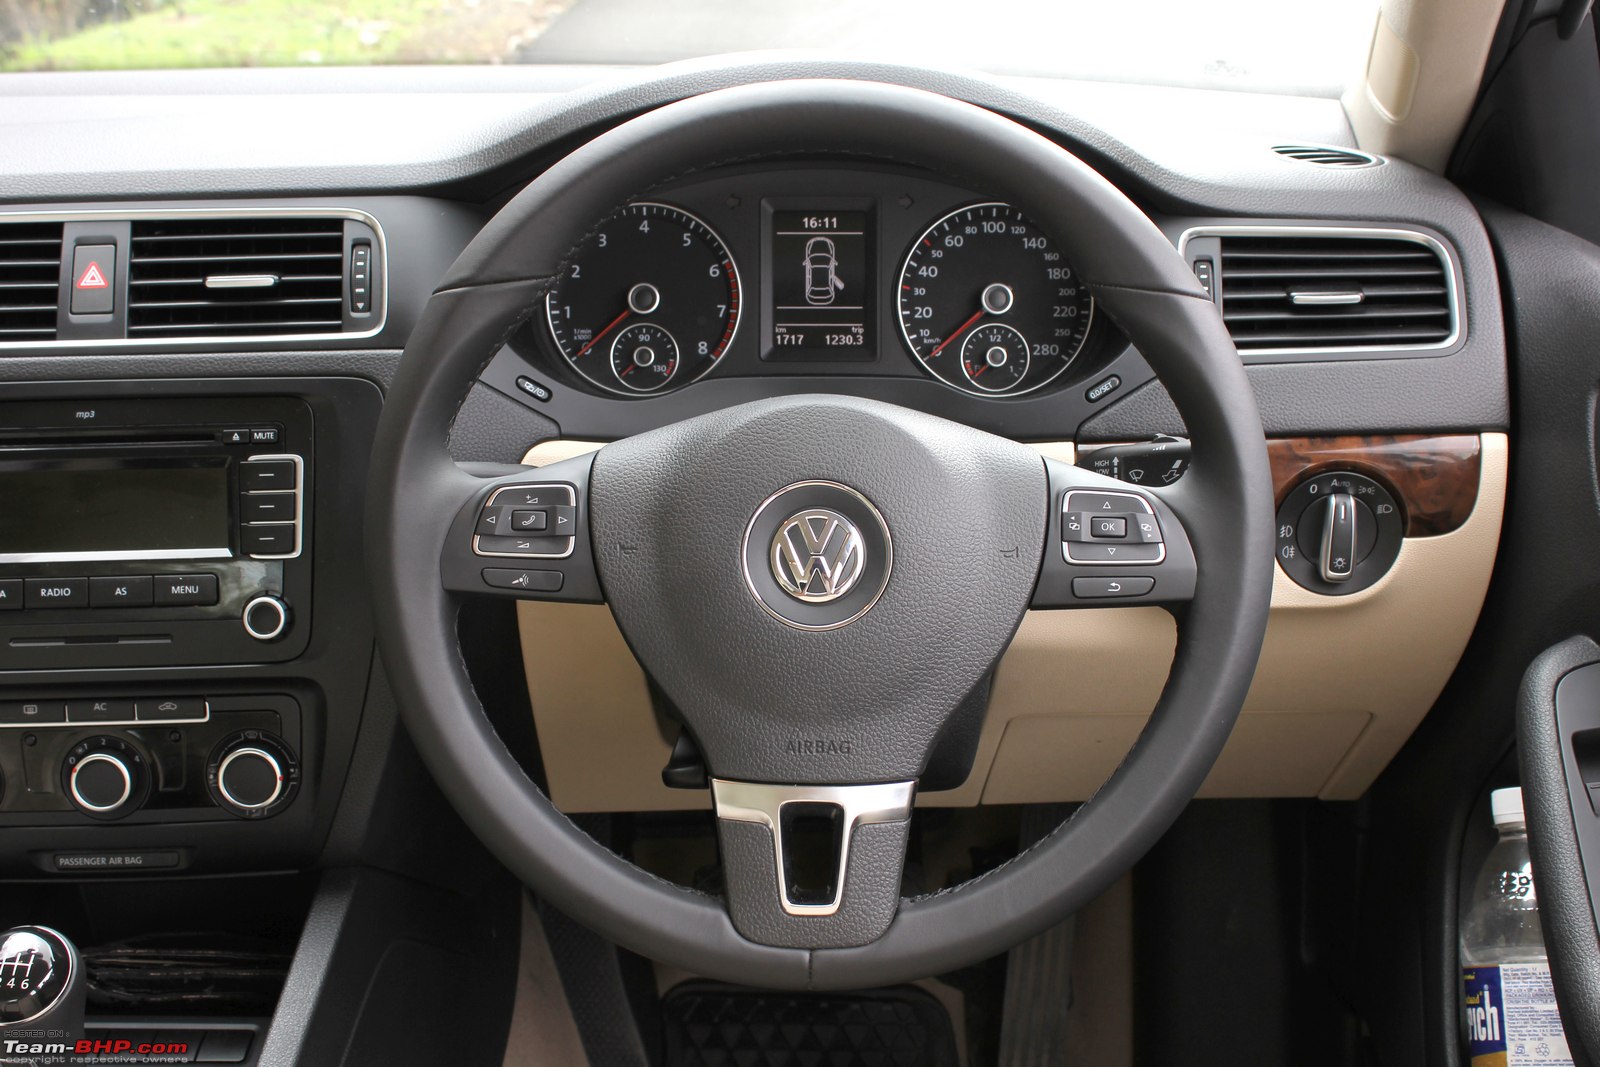 Volkswagen Jetta 1.4 TSI : Official Review - Team-BHP